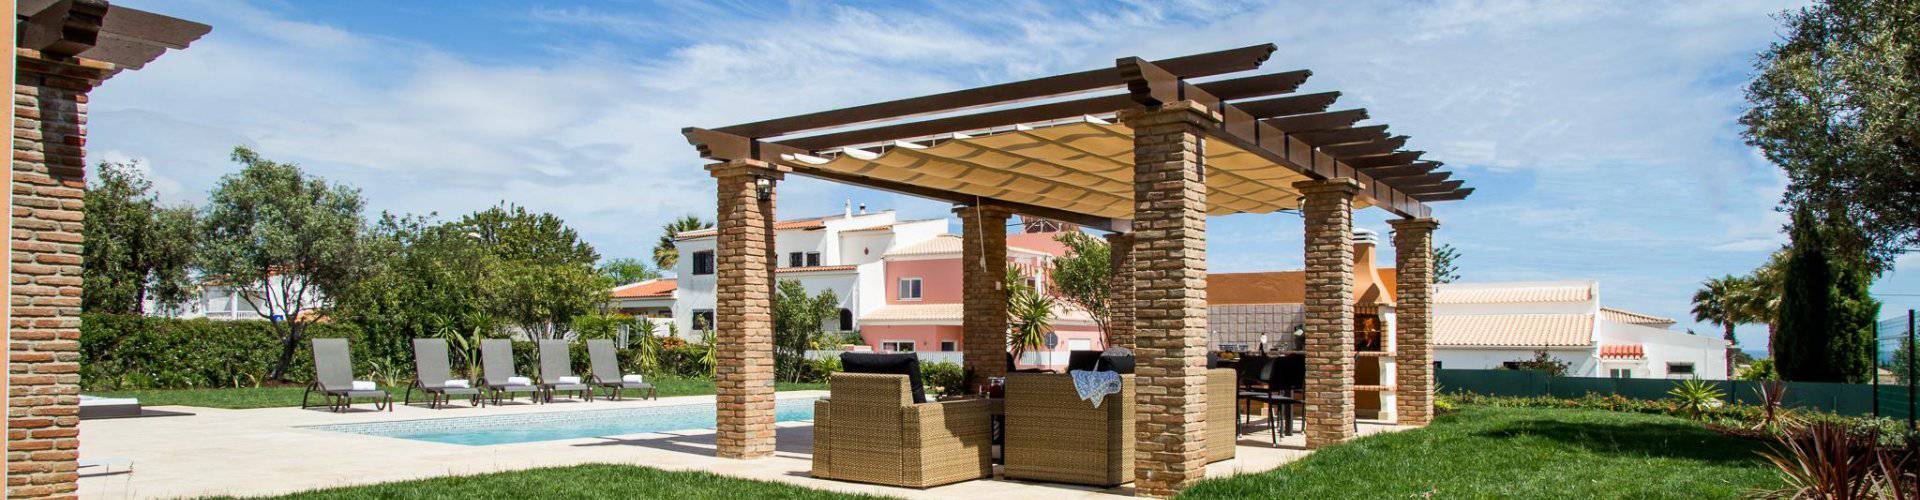 Colina Hotels & Resorts - Carvoeiro - 